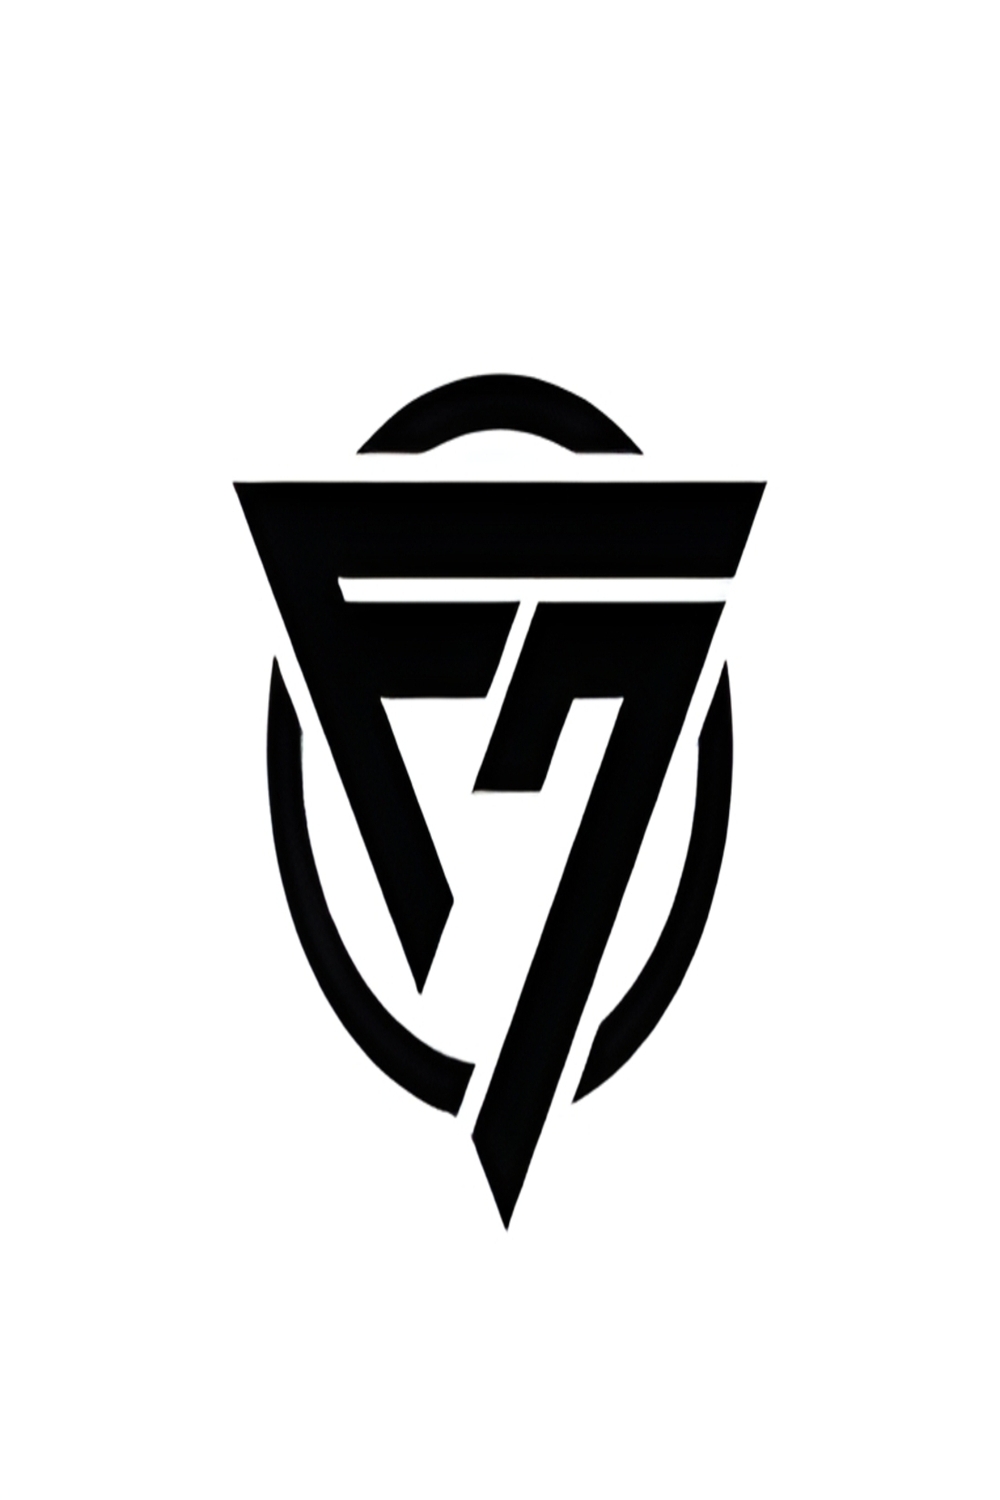 F 7 logo with faiz name pinterest preview image.